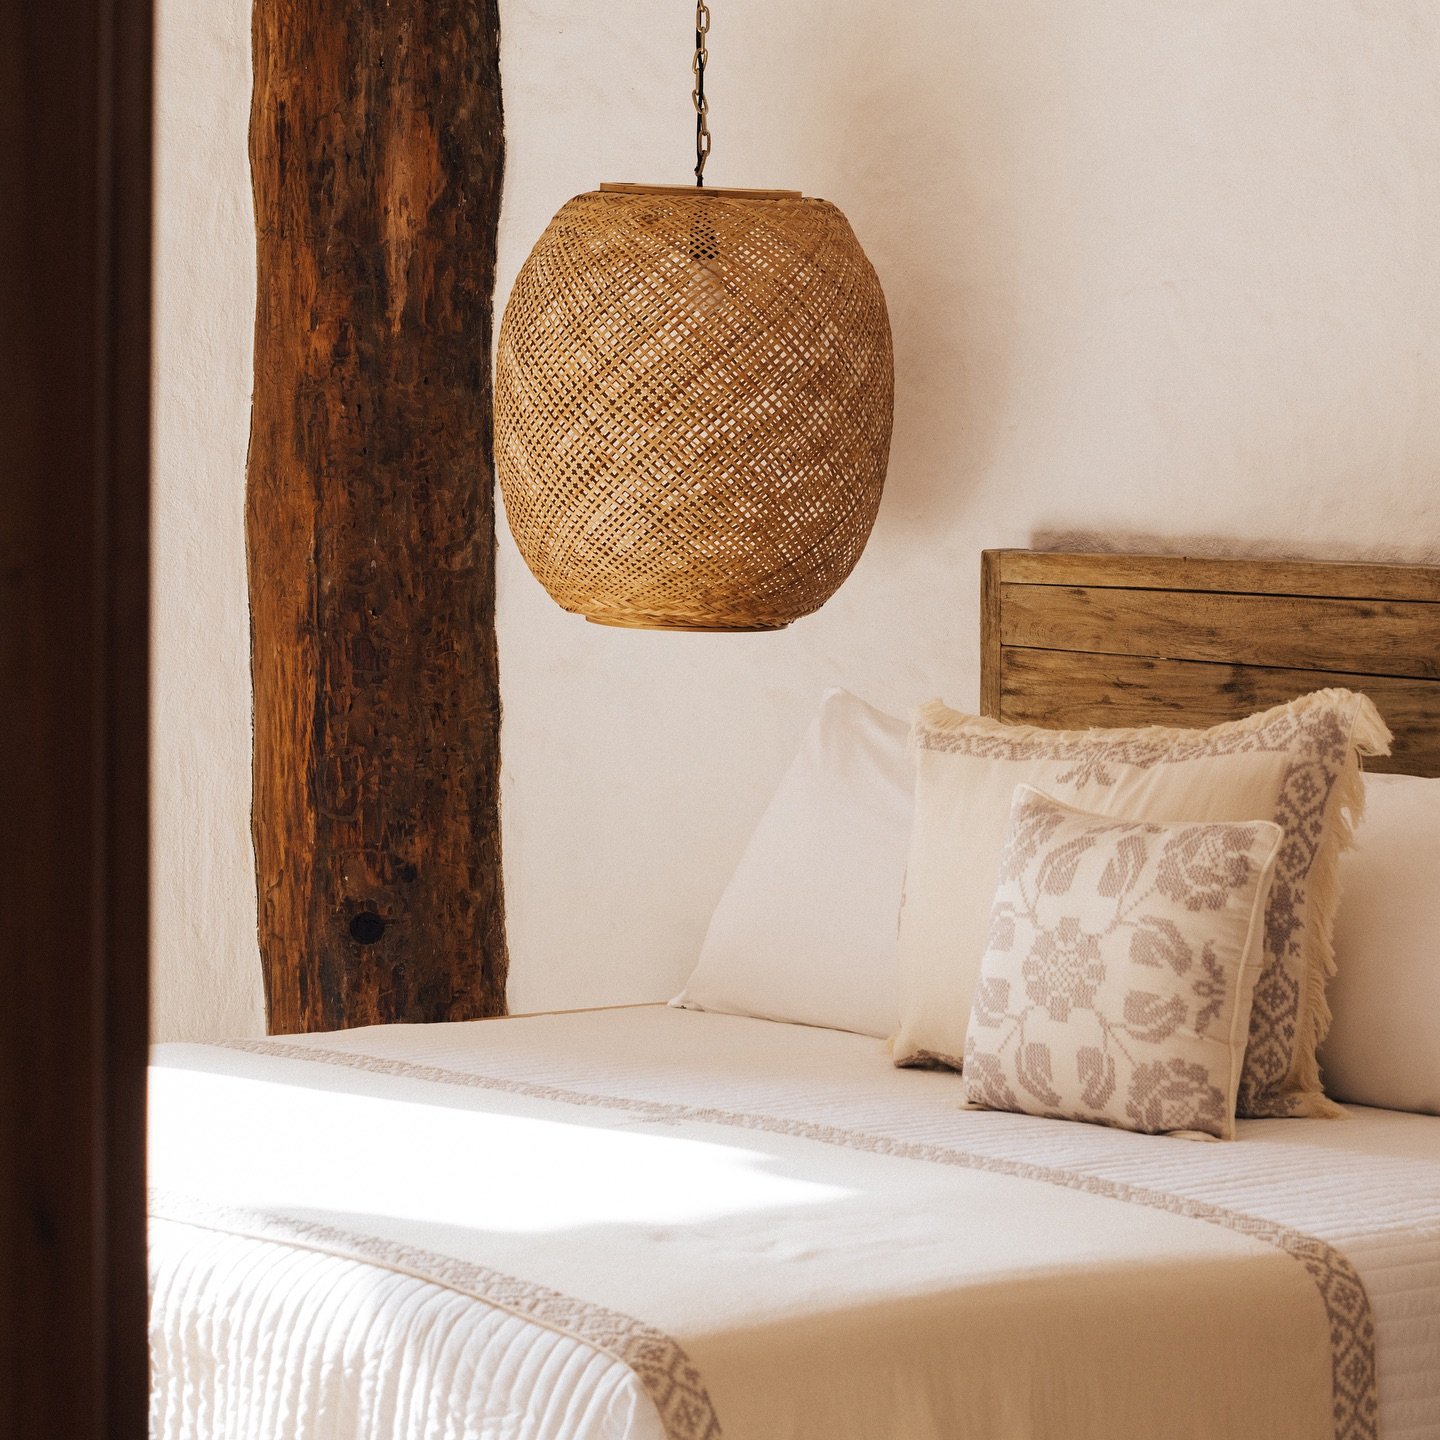 Embrace your moment of peace🍃
Hotel Casa 🐢 Las Tortugas

.

Dale la bienvenida a tu momento de calma 🍃
Hotel Casa 🐢 Las Tortugas